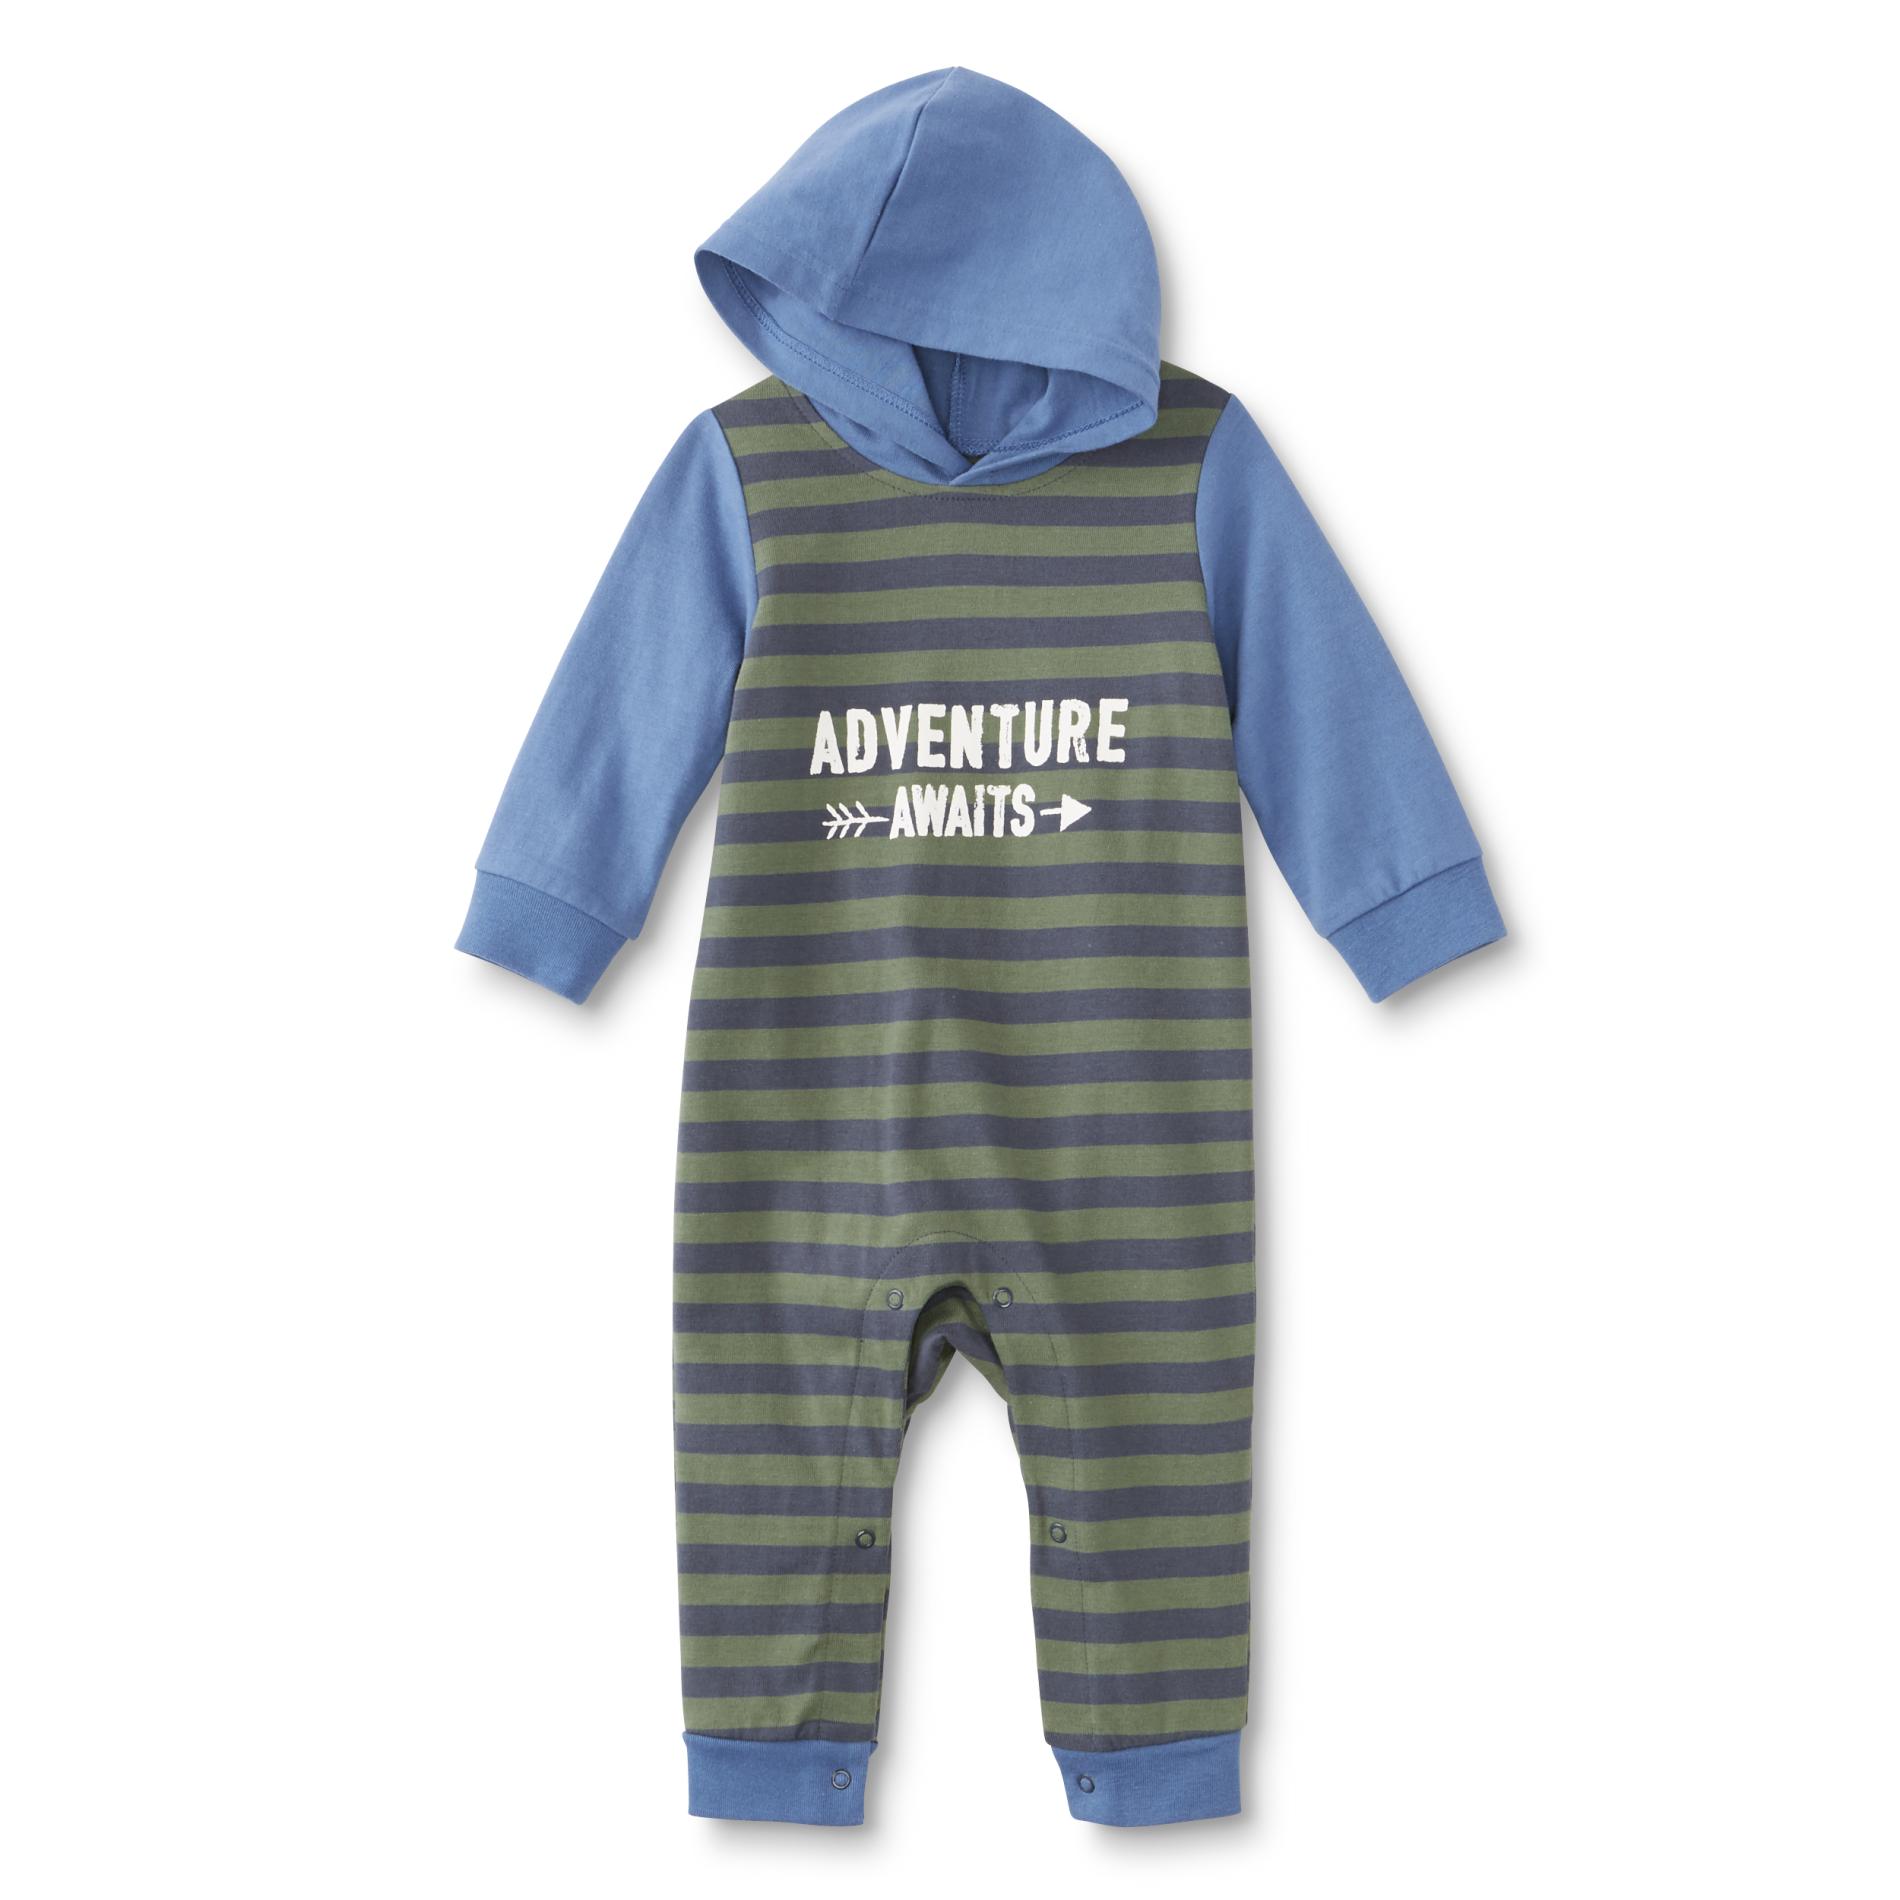 Little Wonders Newborn & Infant Boy's Hooded Sleeper Pajamas - Striped